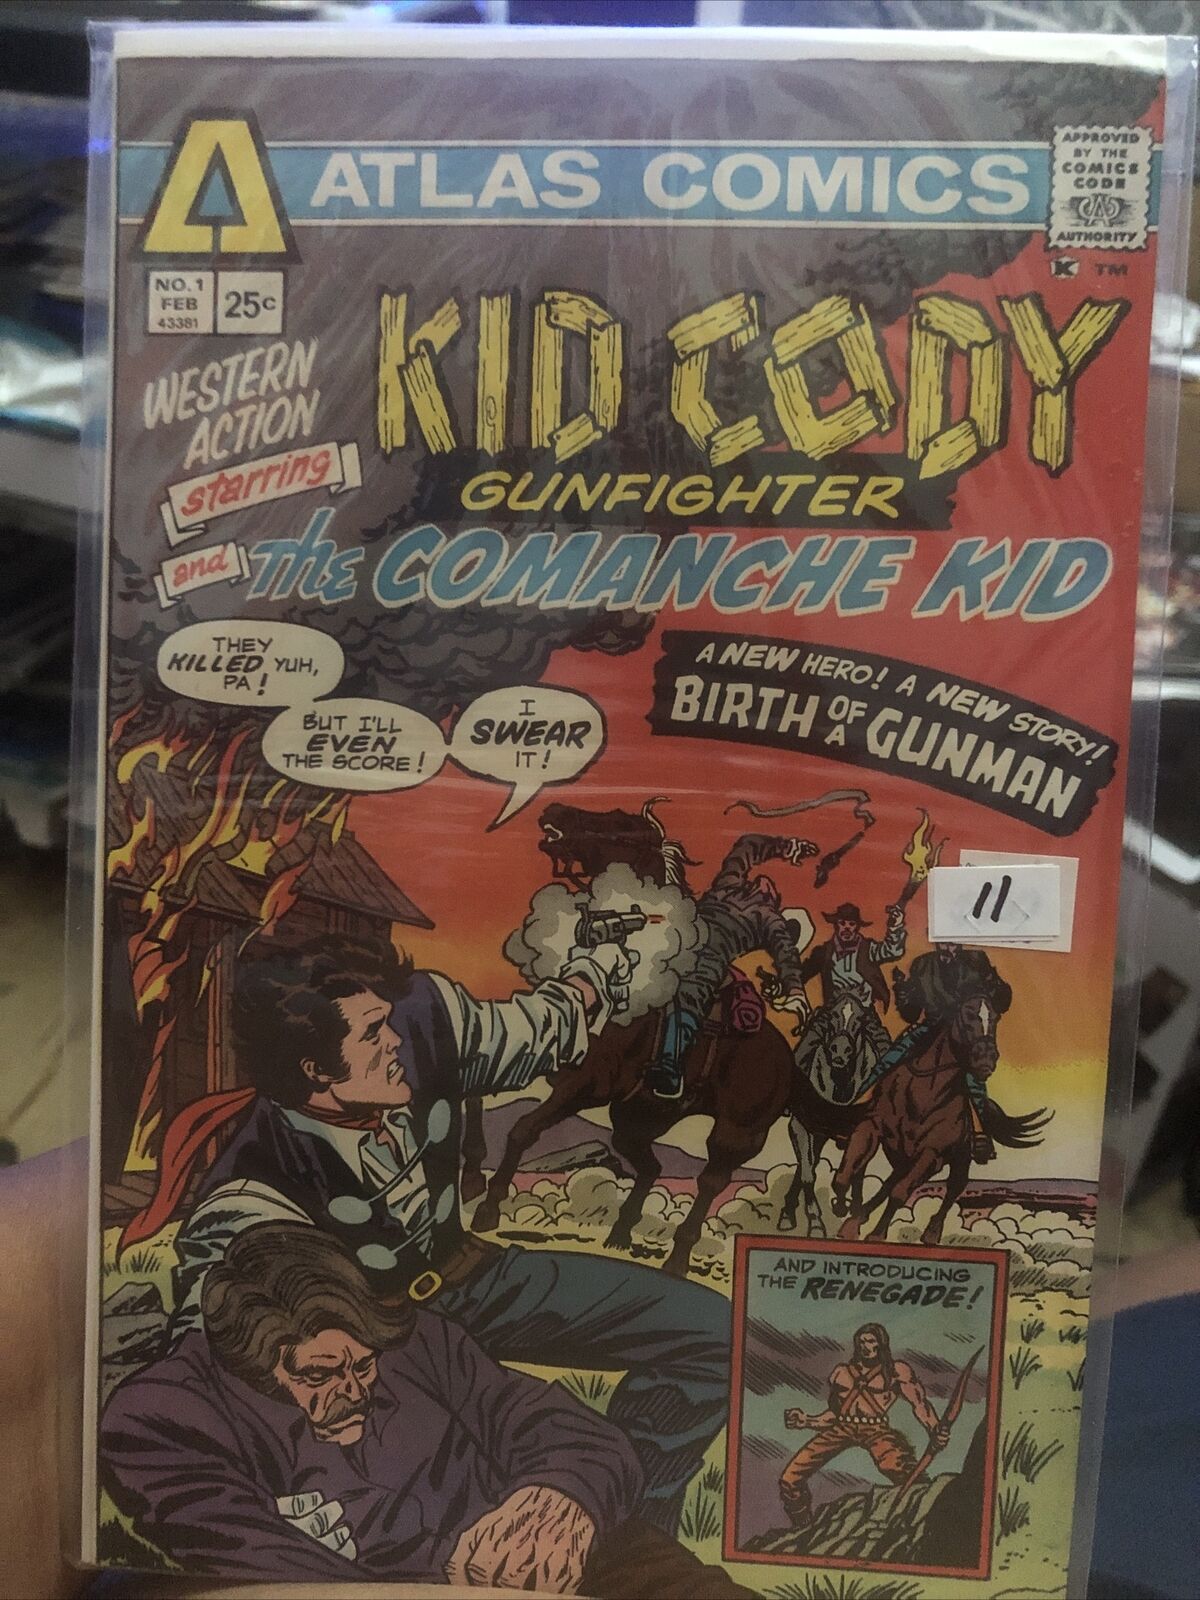 Western Action Starring Kid Cody Gunfighter #1 (Atlas Comics)